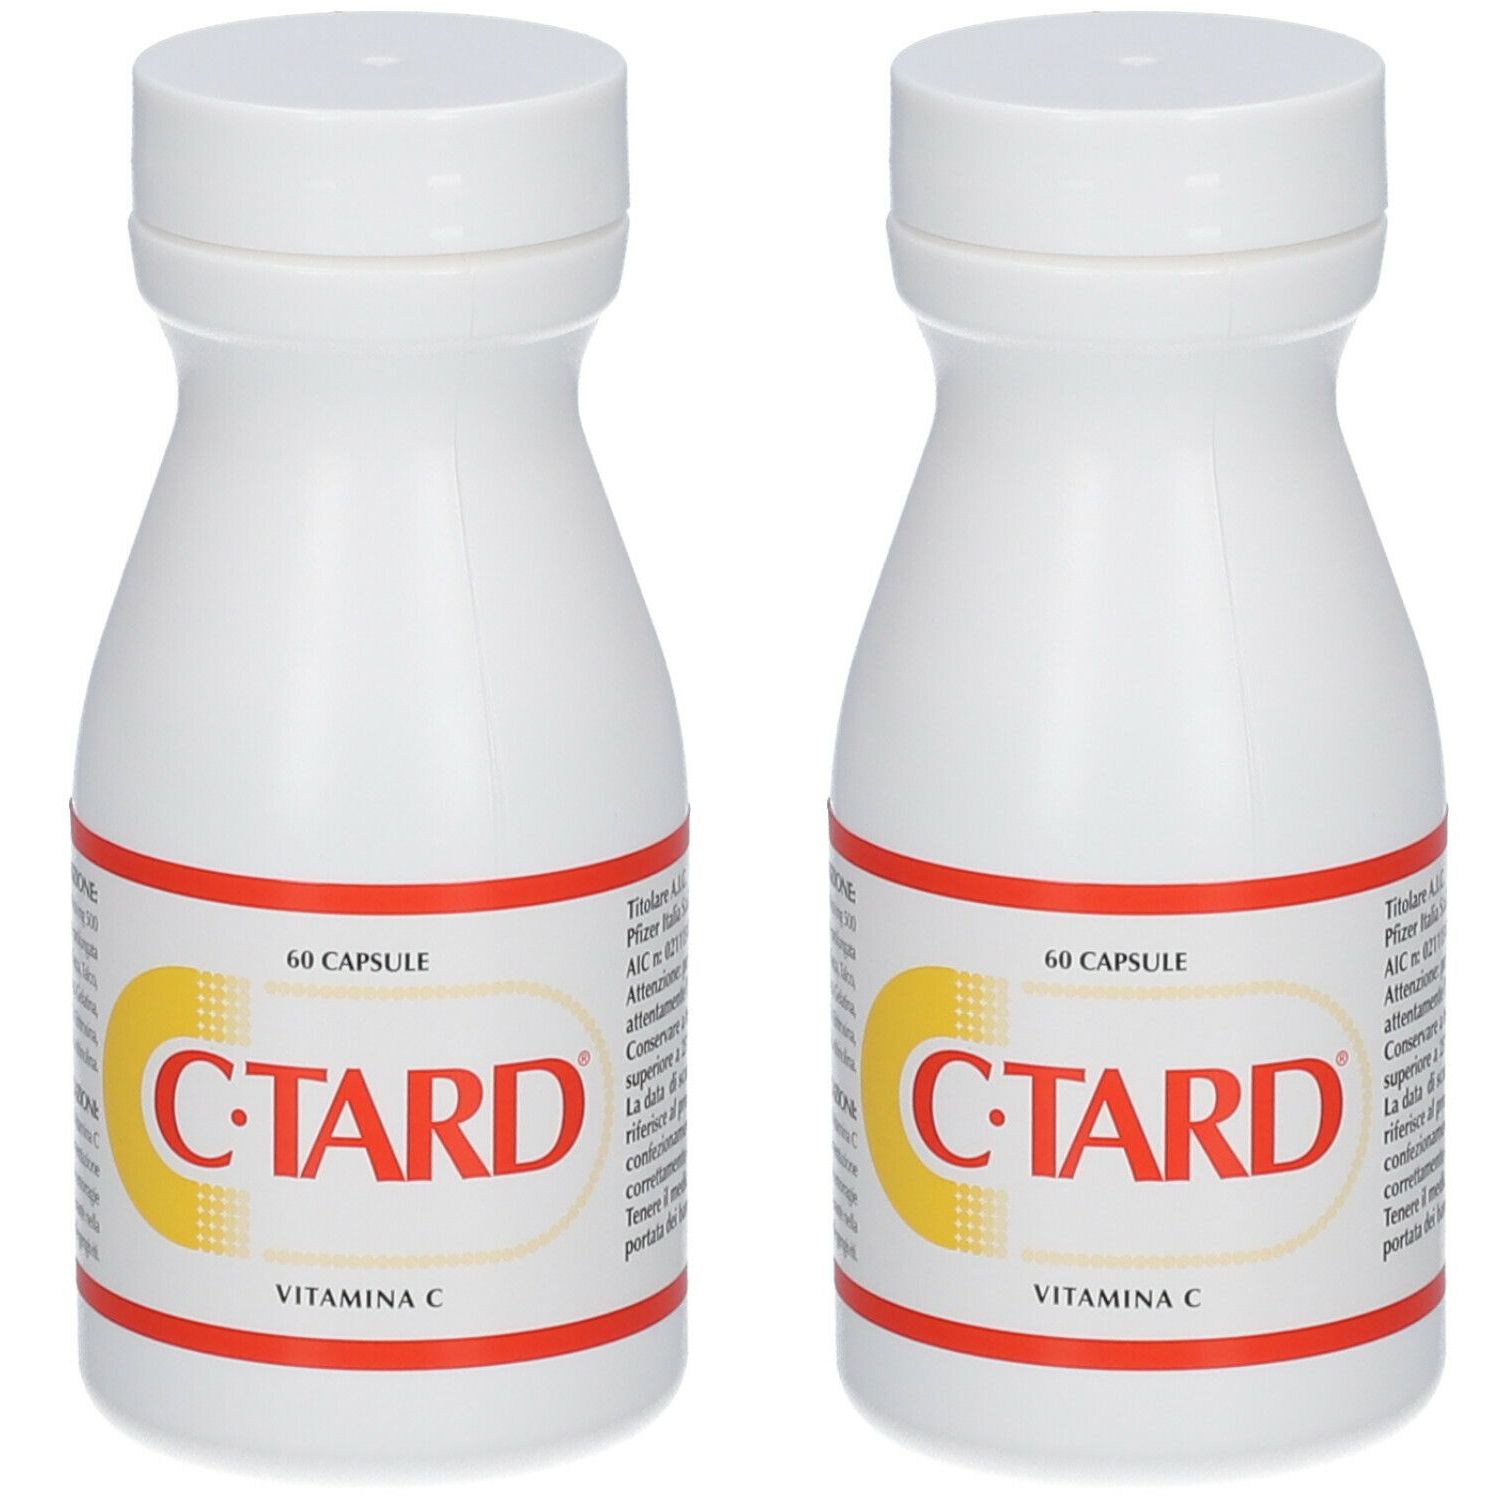 C Tard® Vitamina C